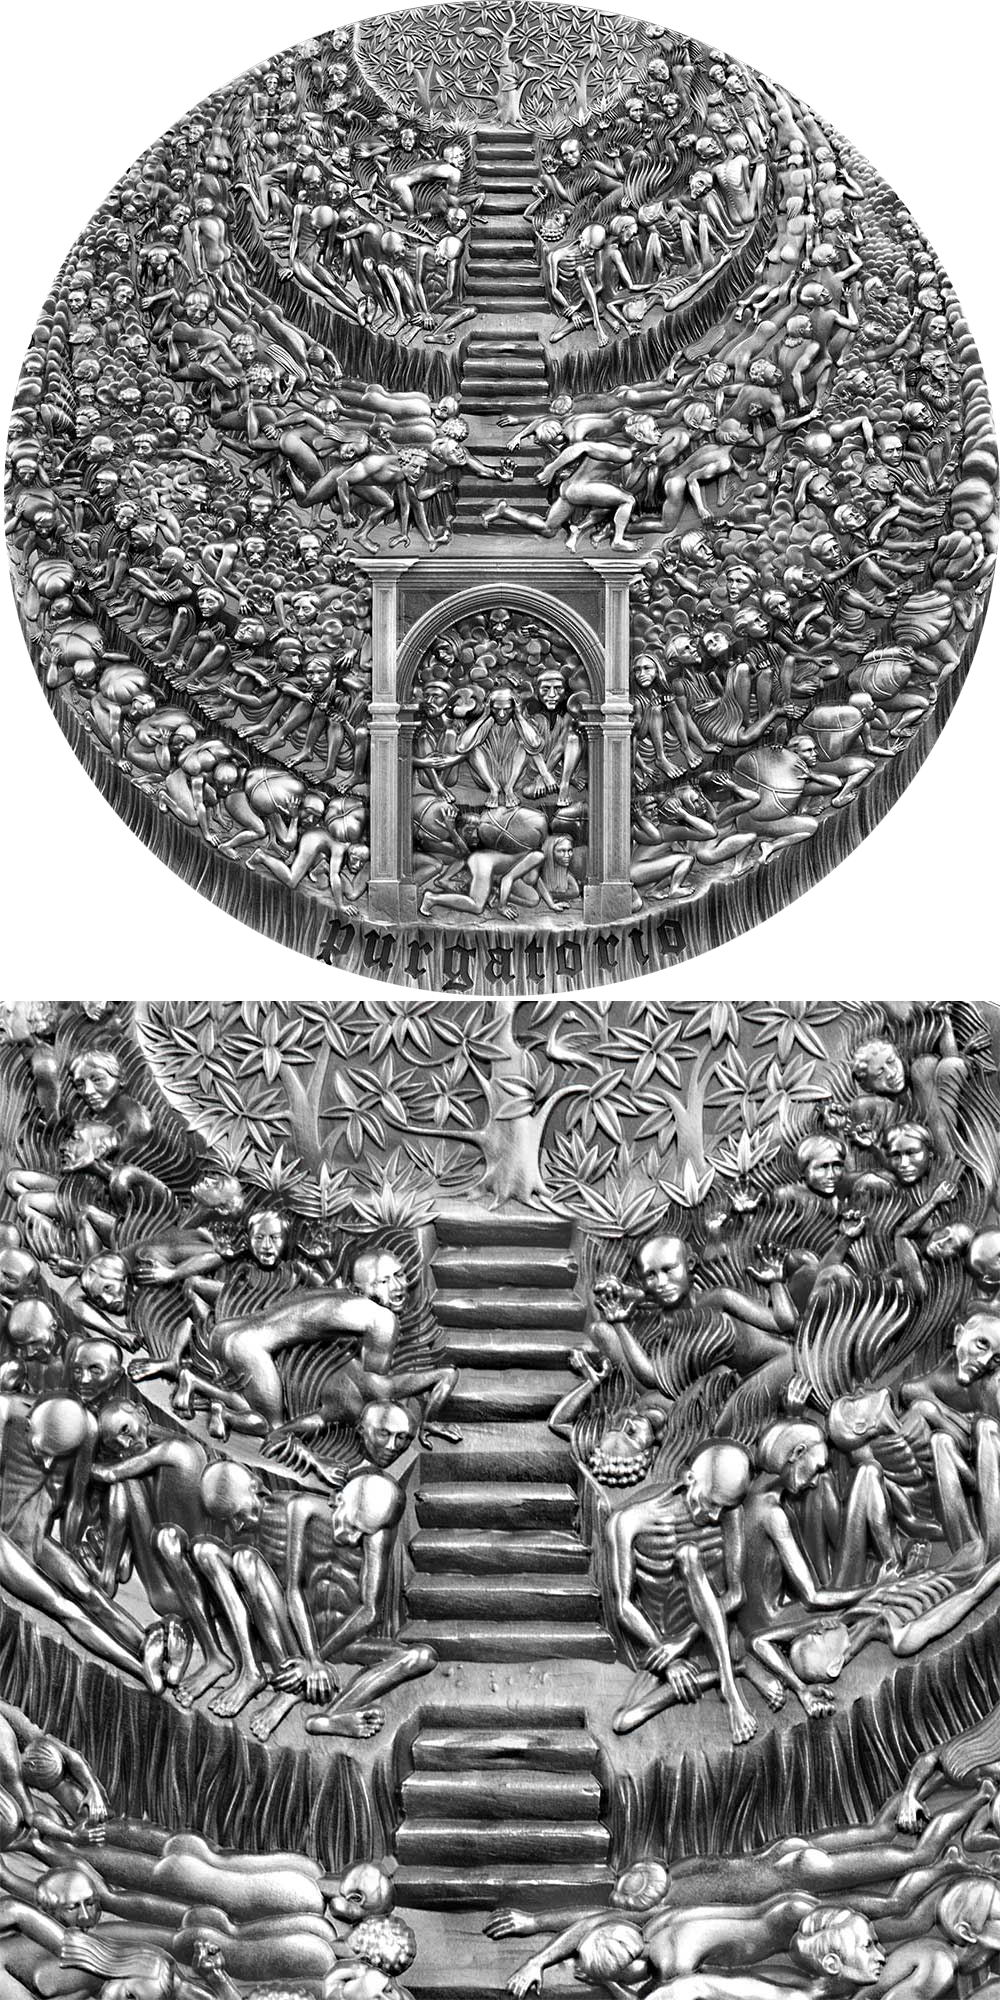 Purgatorio Silver Coin